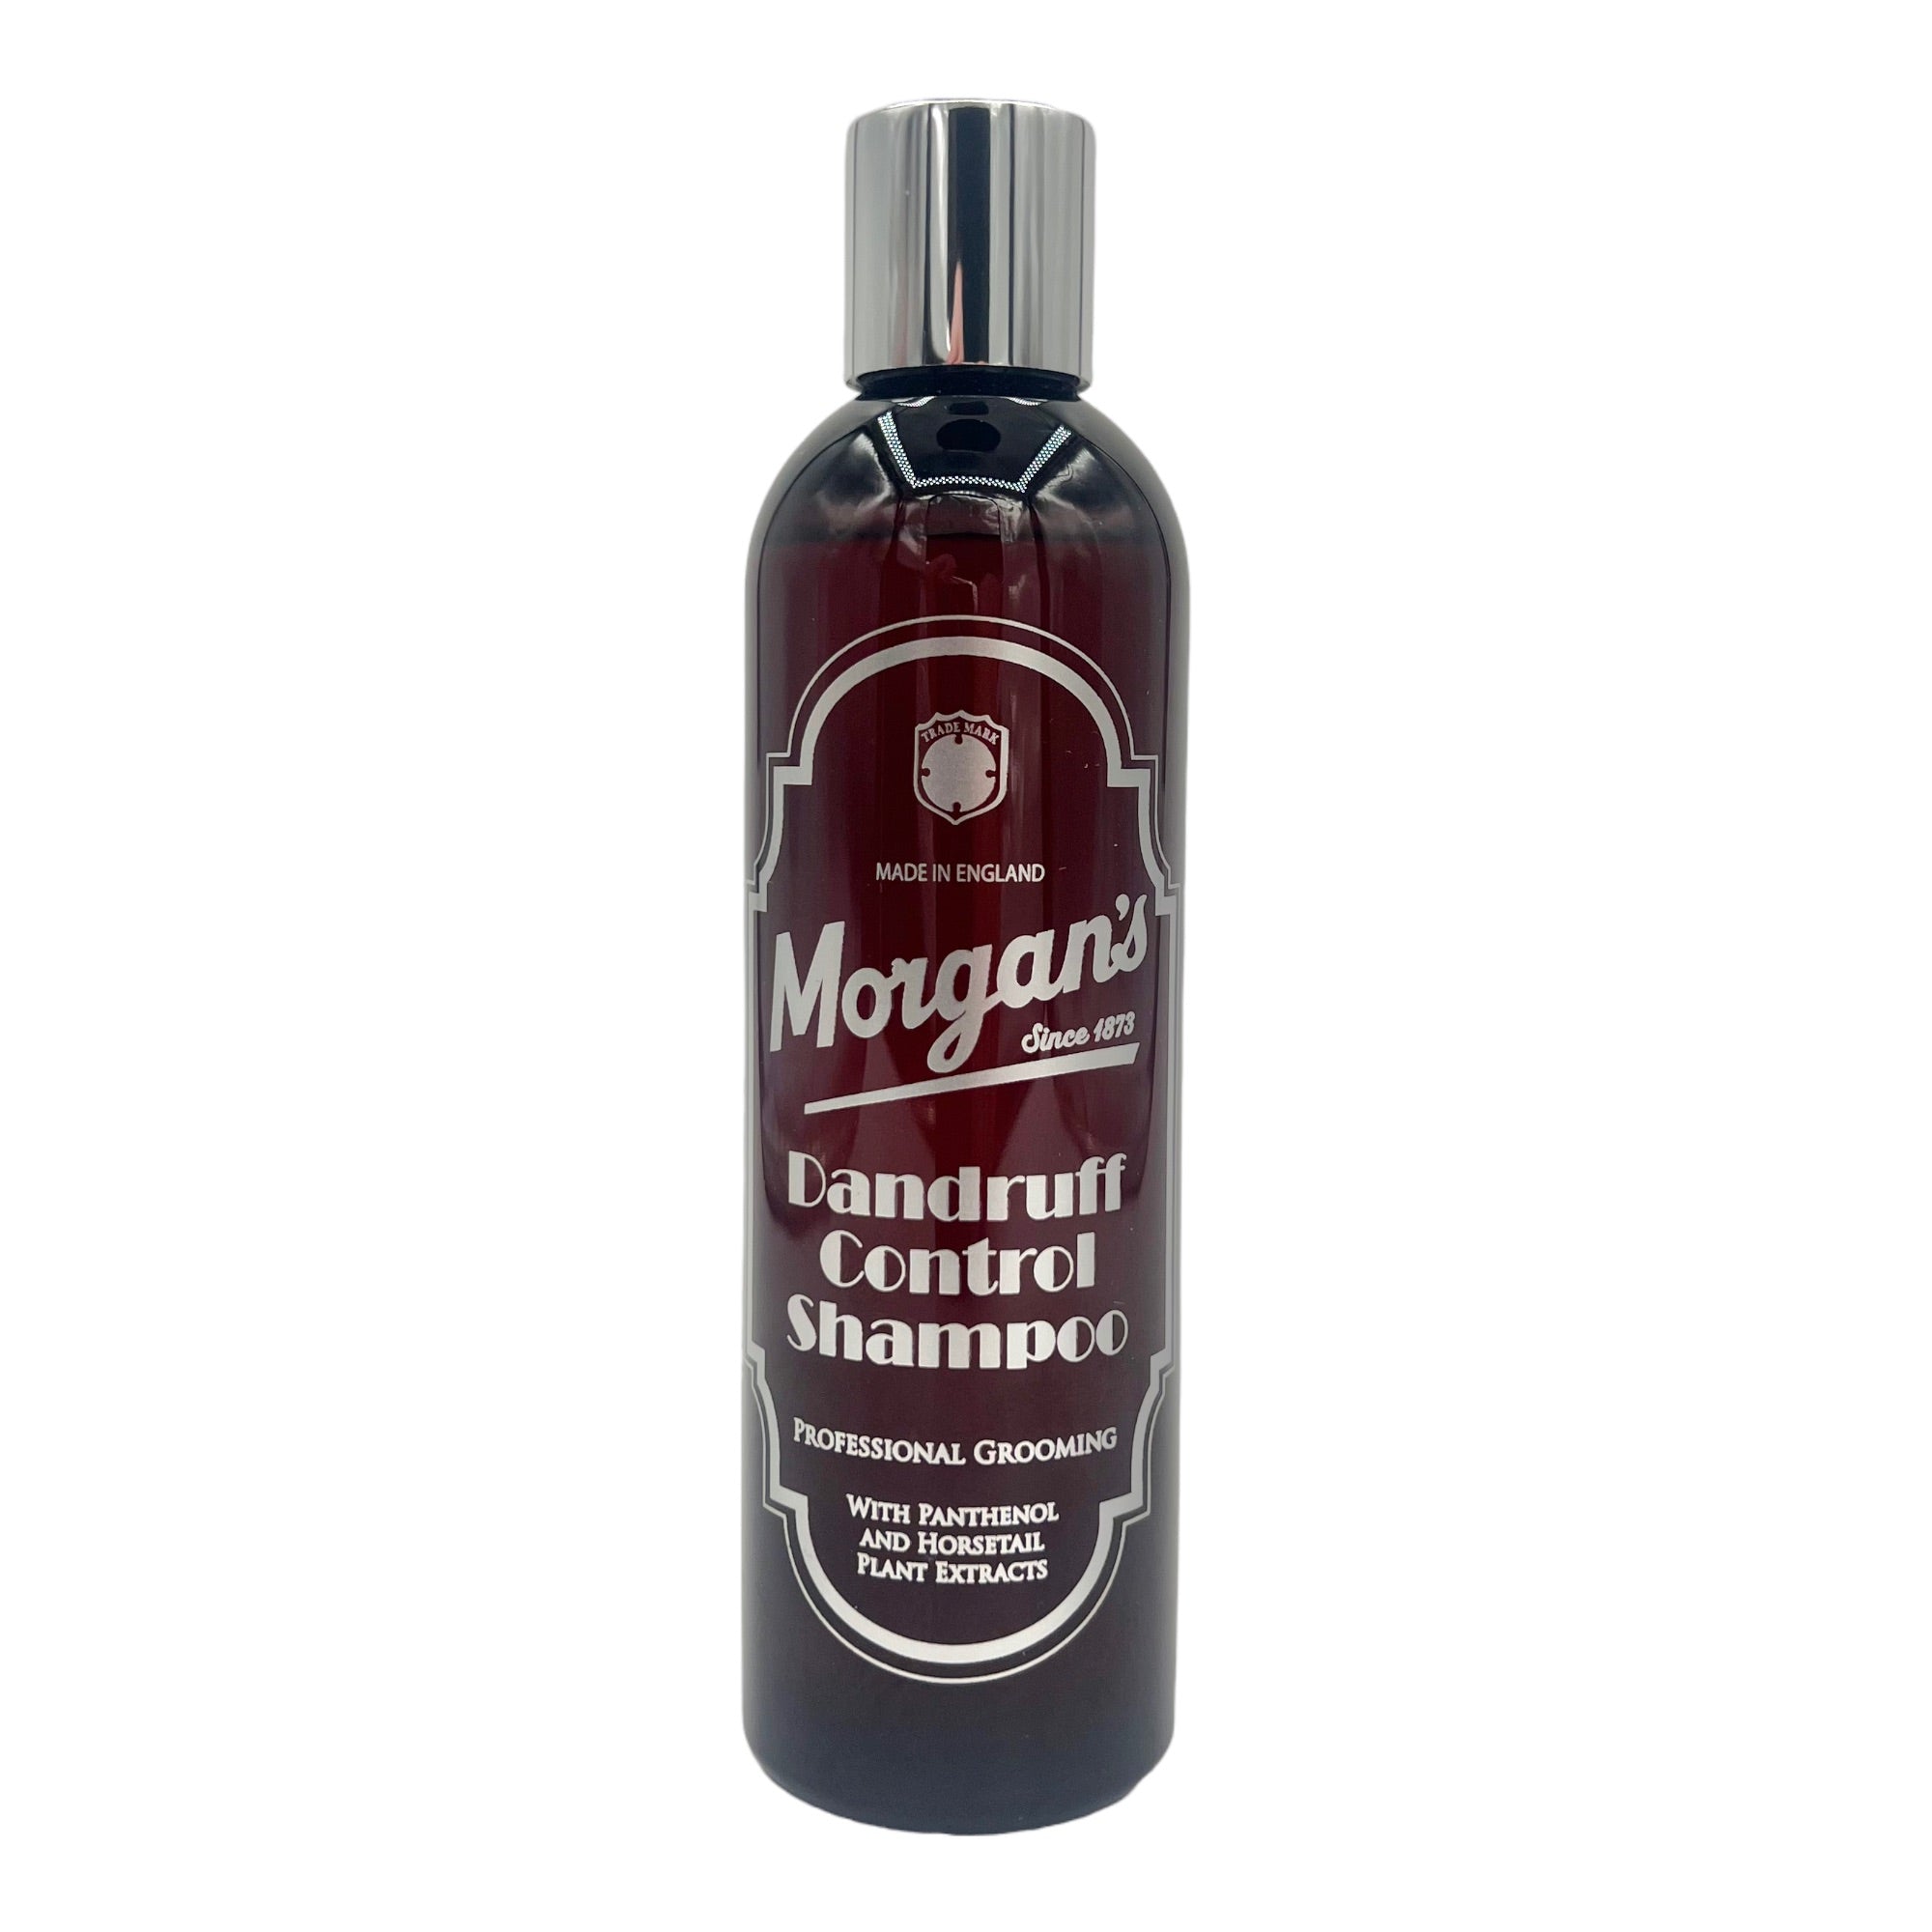 Morgan's - Dandruff Control Shampoo 250ml